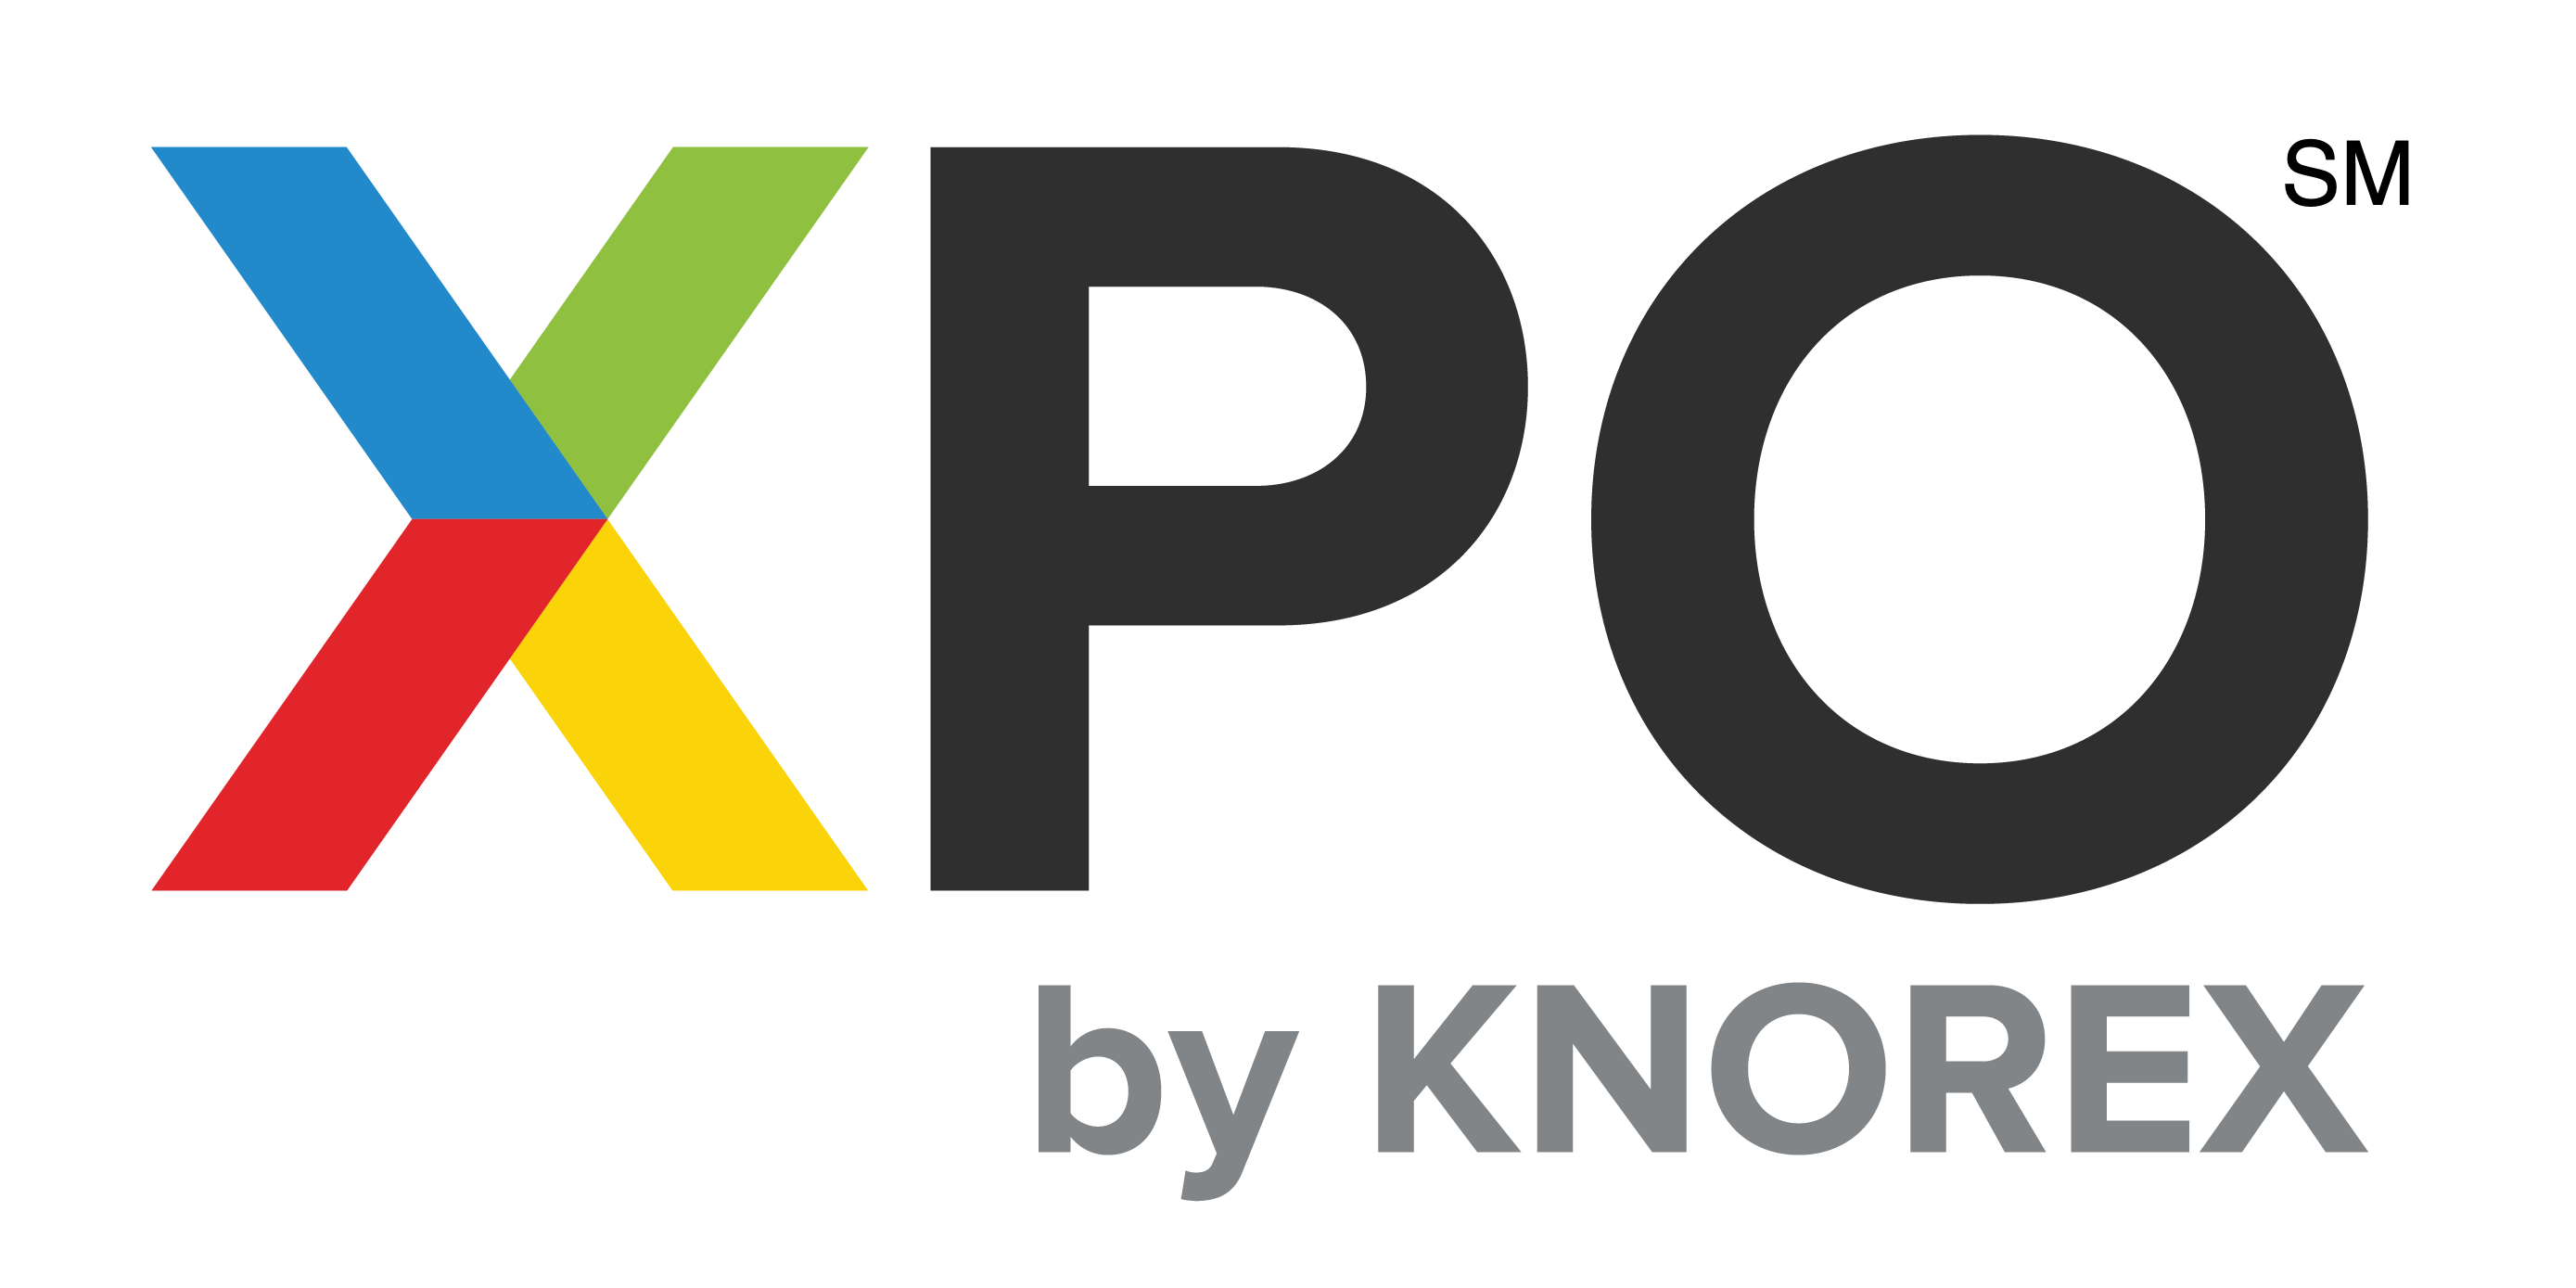 Knorex XPO Logo